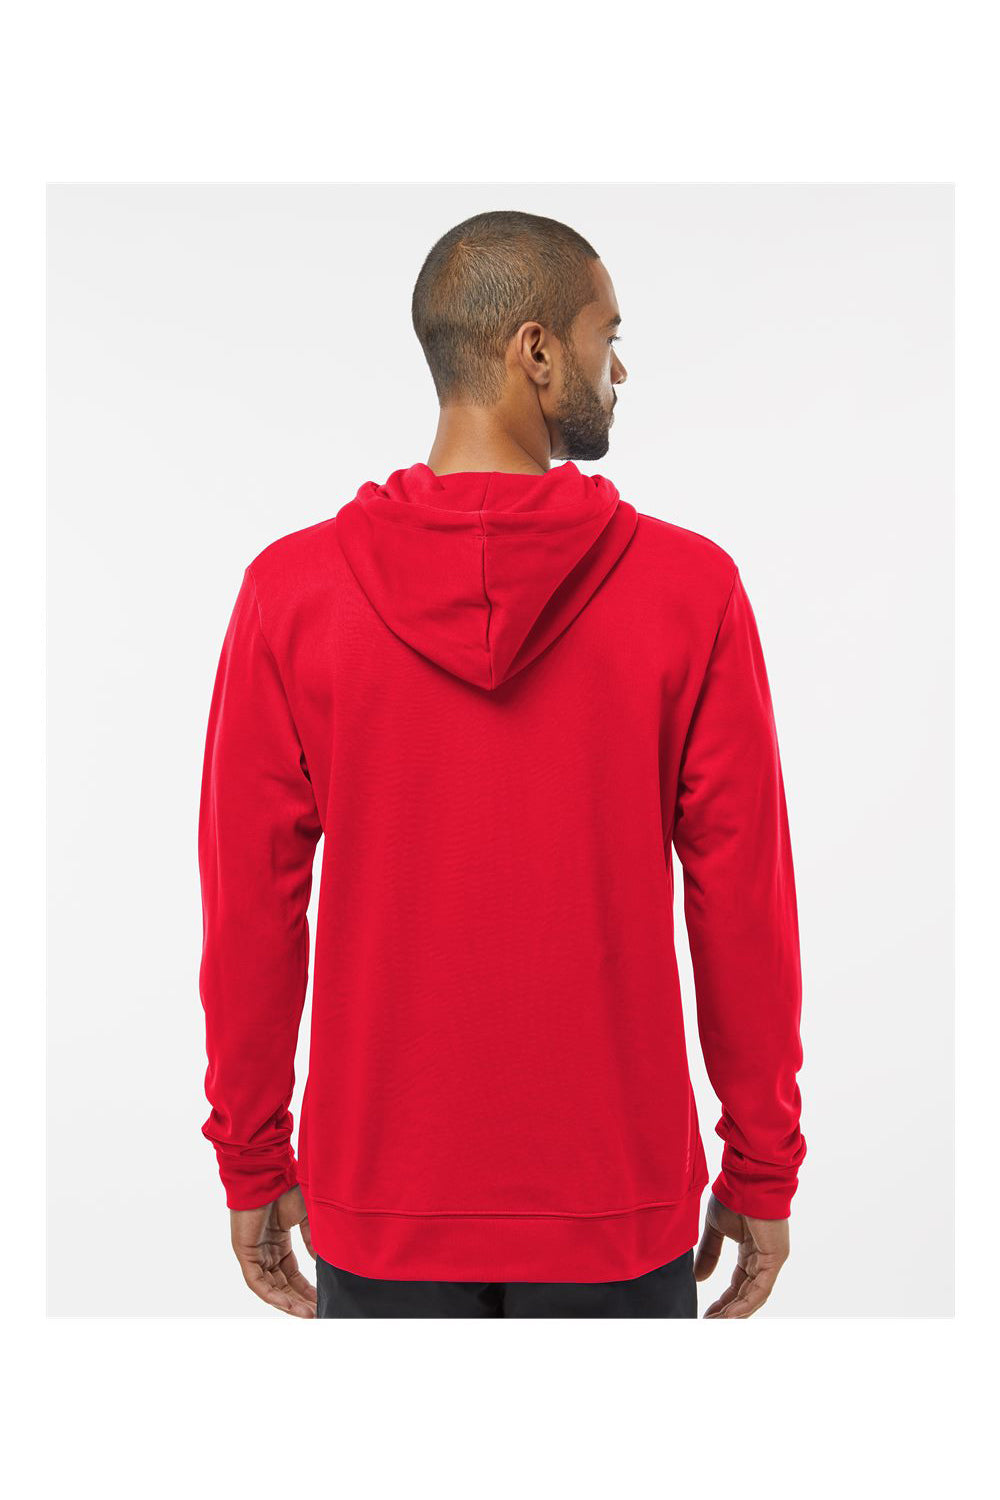 Oakley FOA402994 Mens Team Issue Hydrolix Hooded Sweatshirt Hoodie Team Red Model Back